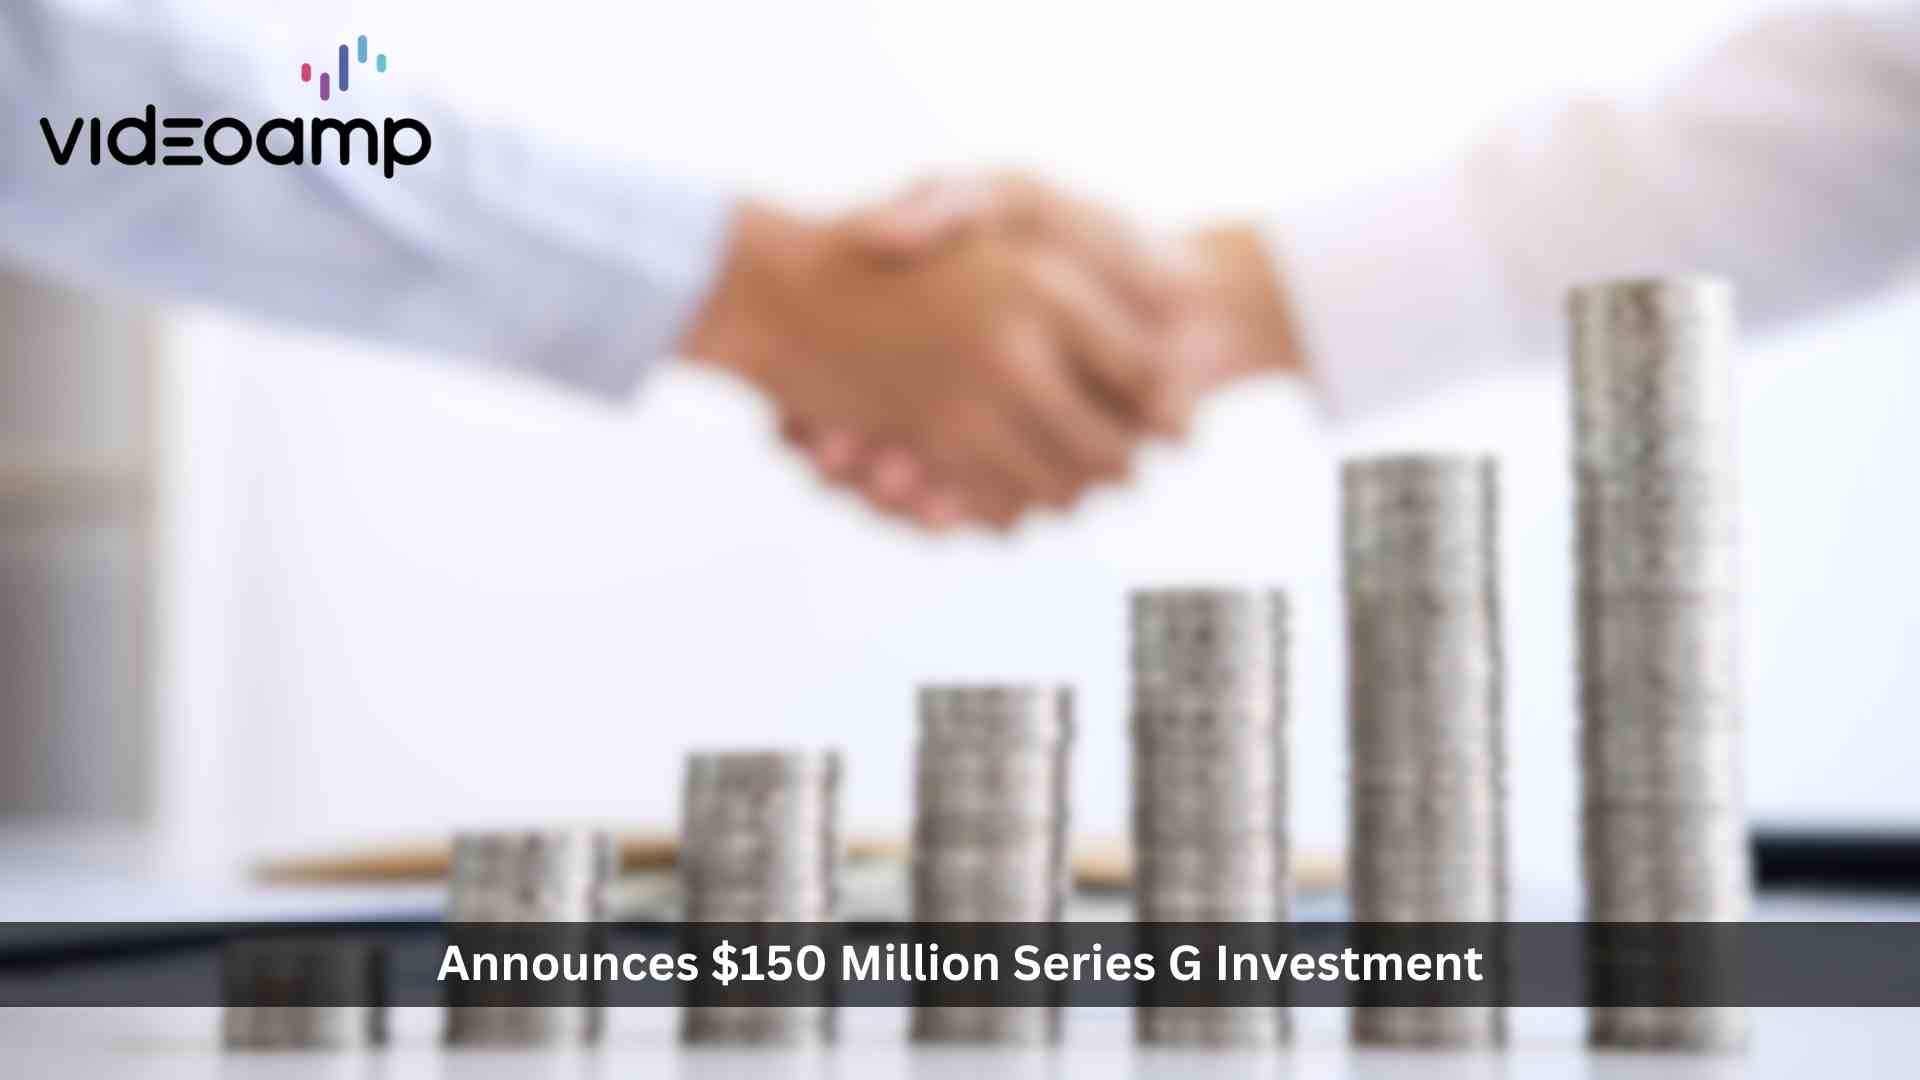 VideoAmp Announces $150 Million Series G Investment Led by Vista Credit Partners